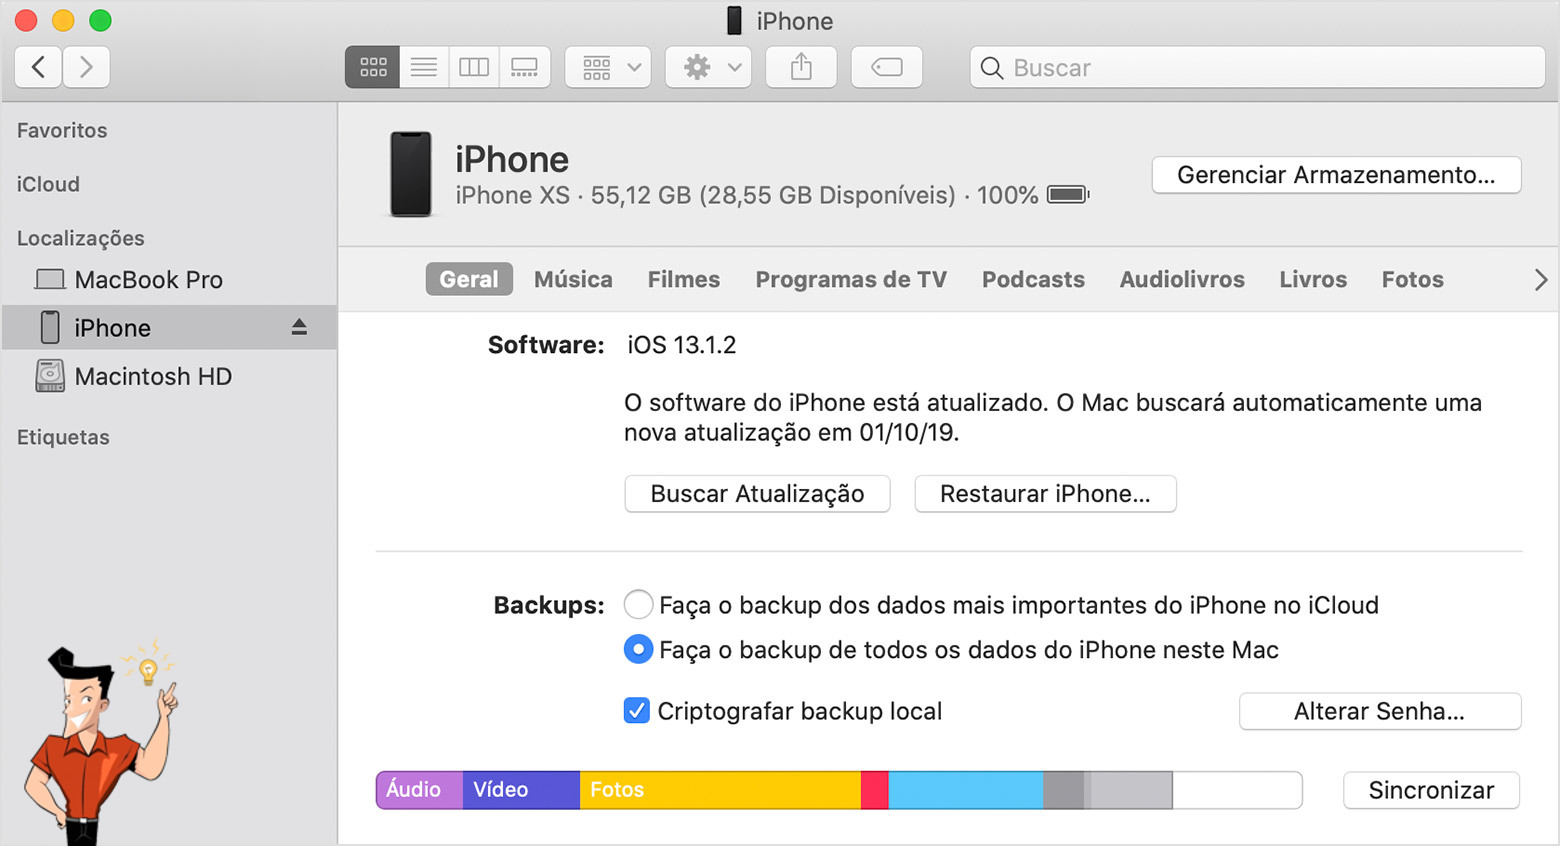 remover a senha de backup esquecida do iPhone no iTunes